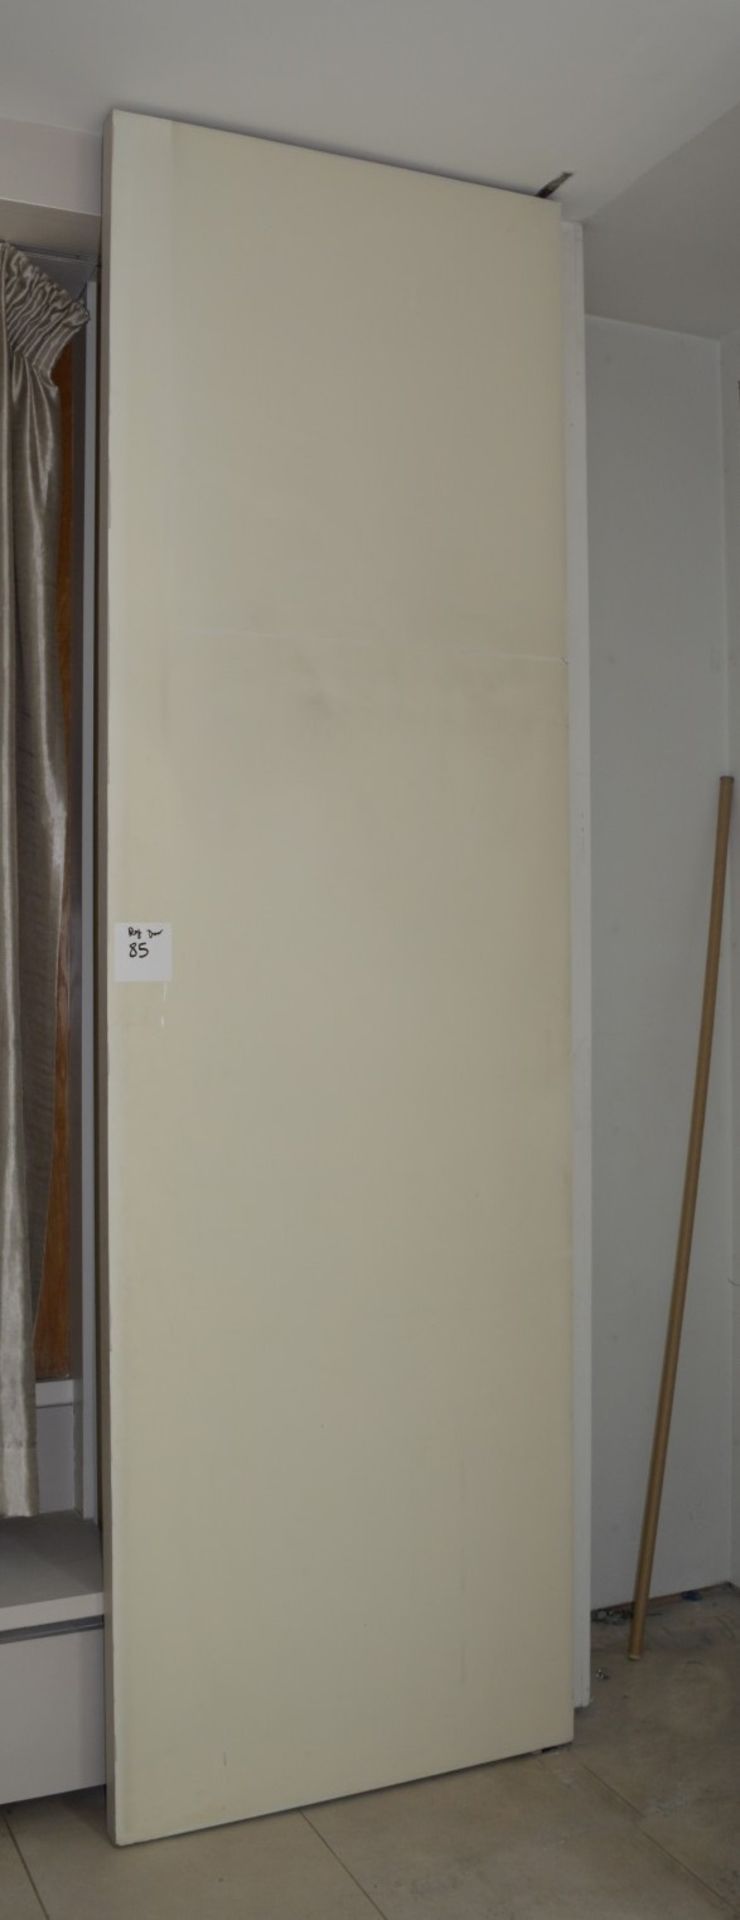 1 x Fire Resistant Internal Door - Includes Hnges - Over 10 Feet Tall - H308x W93.5 x D5.5cm - CL230